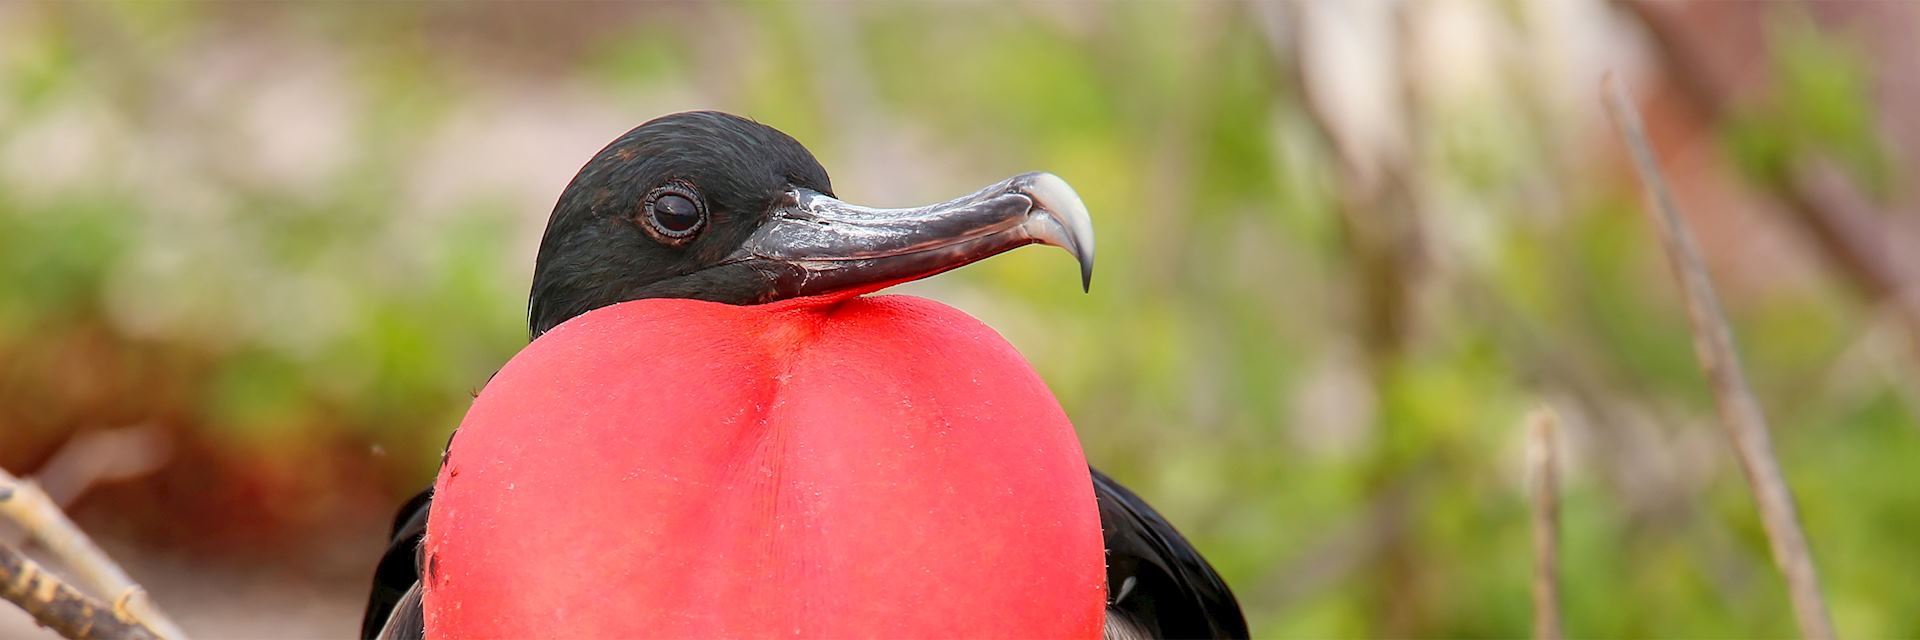 Frigatebird in the Galapagos Islands